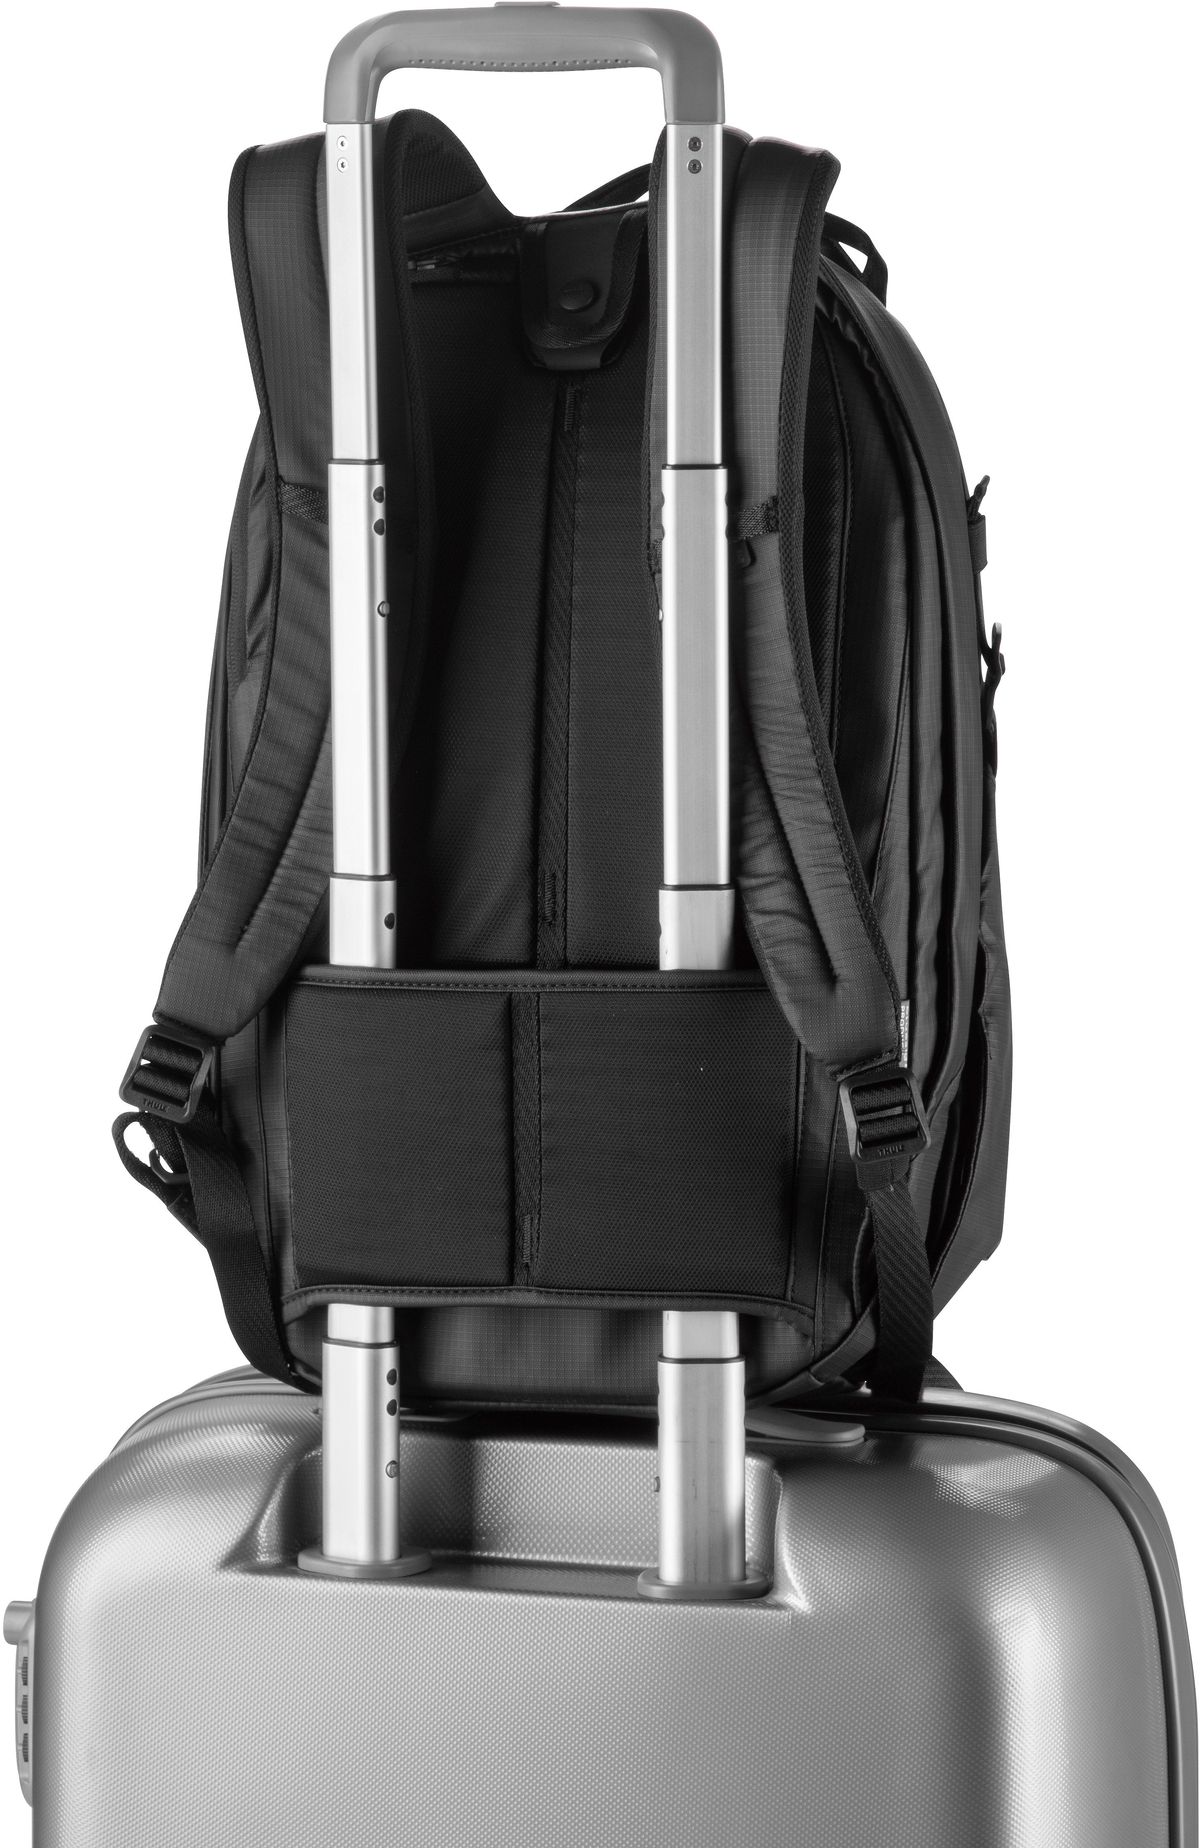 Thule Tact Backpack 16L - Black